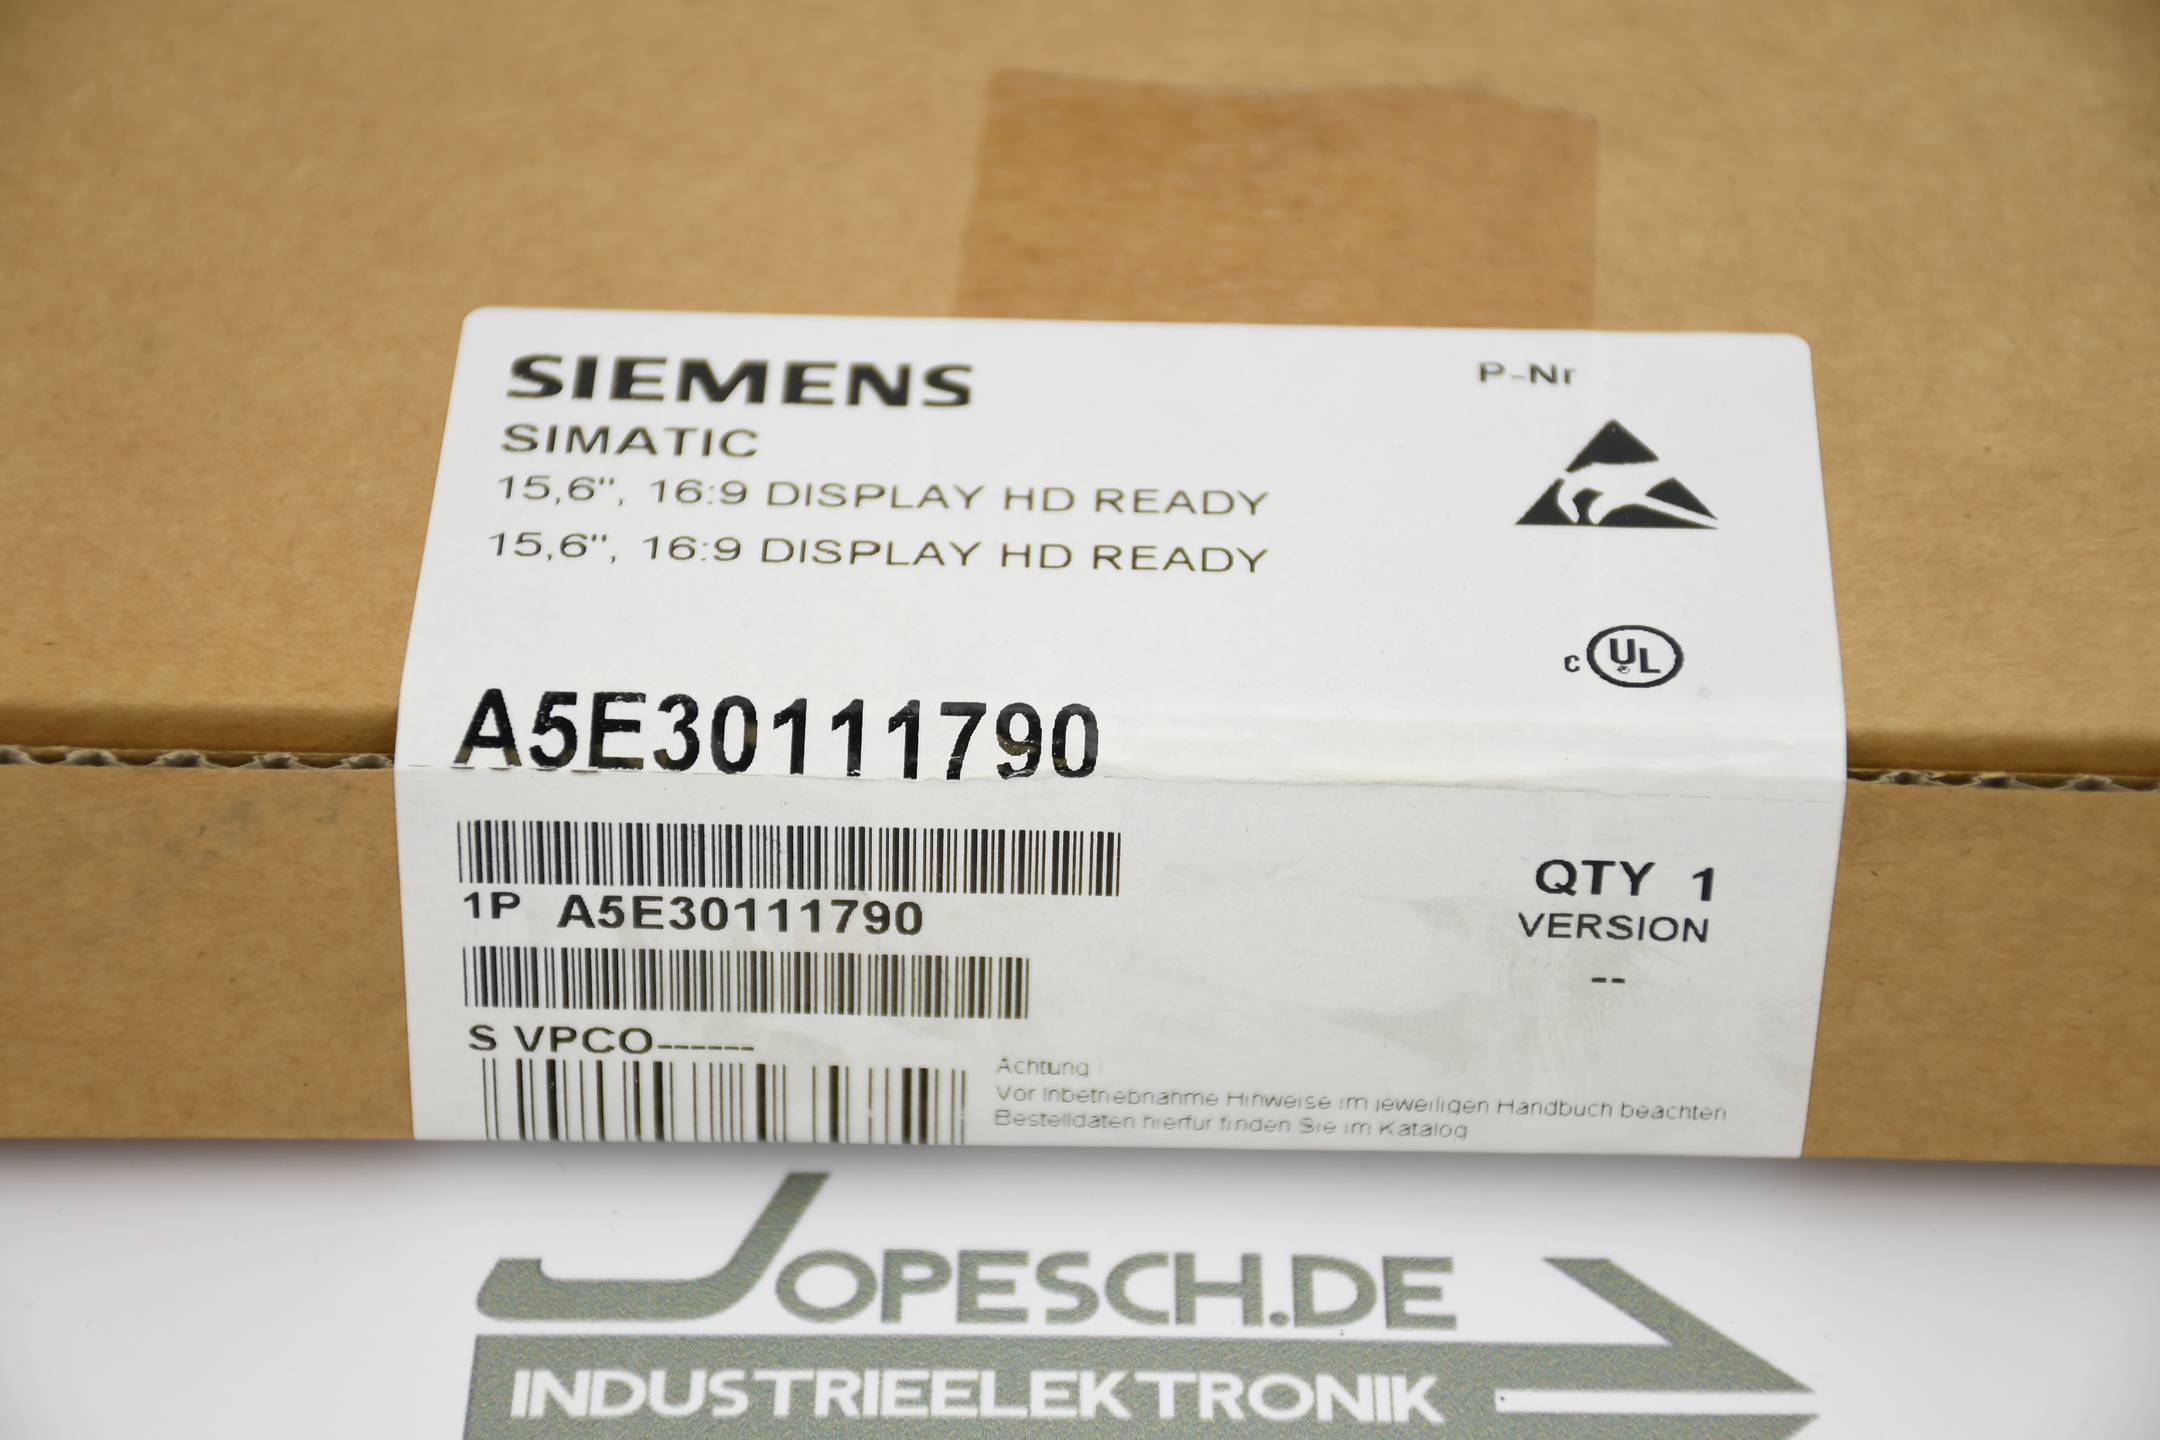 Siemens simatic PG 15.6", 16:9 Display HD Ready A5E30111790